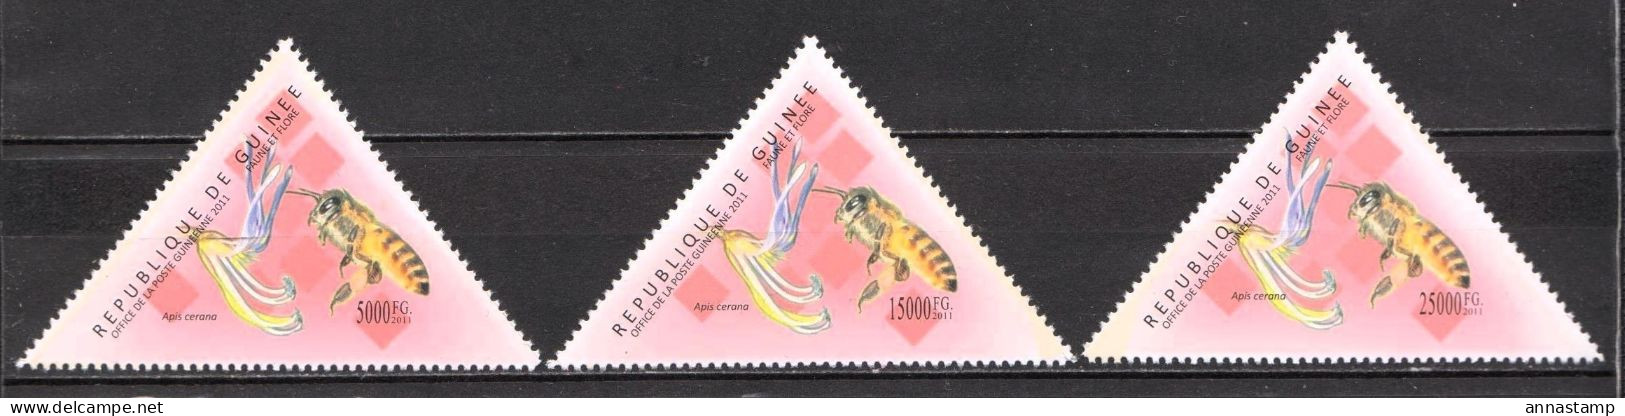 Guinea MNH Set From 2011 - Honingbijen